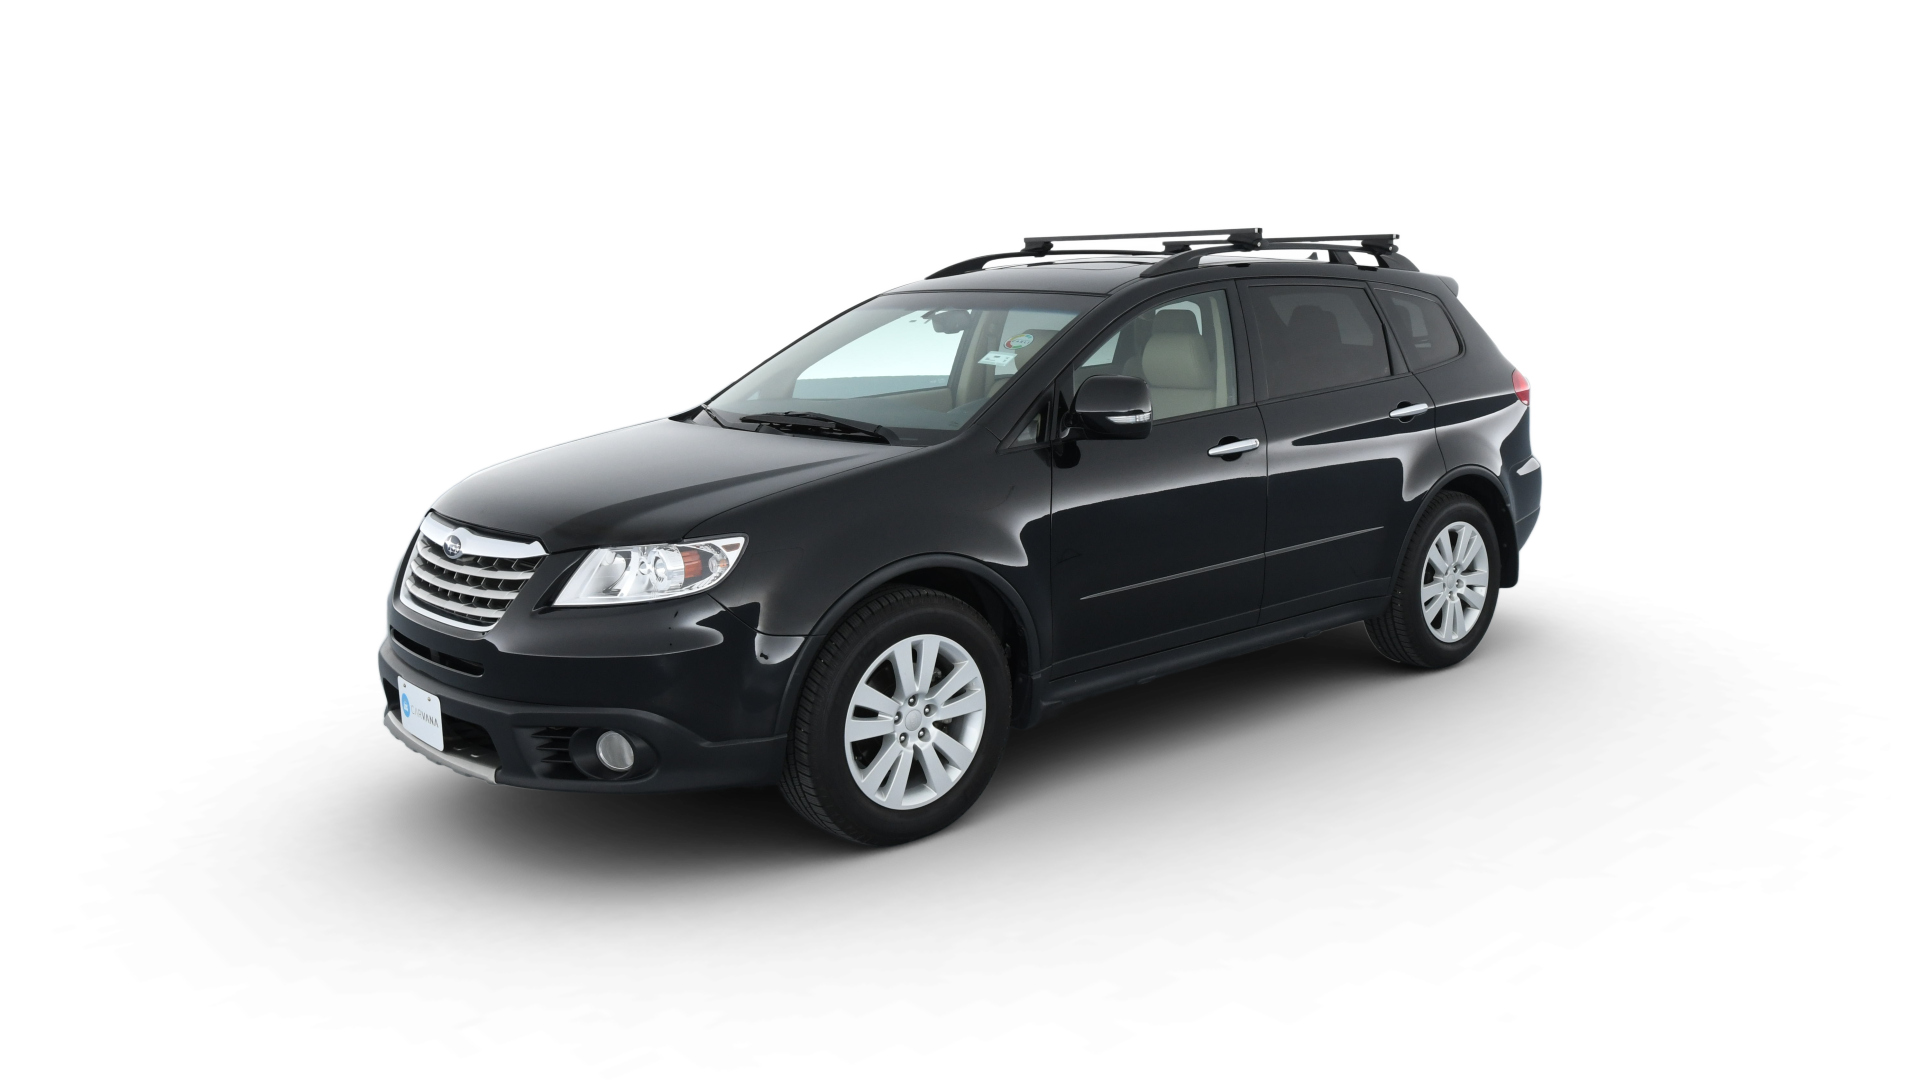 Used 2013 Subaru Tribeca For Sale Online | Carvana